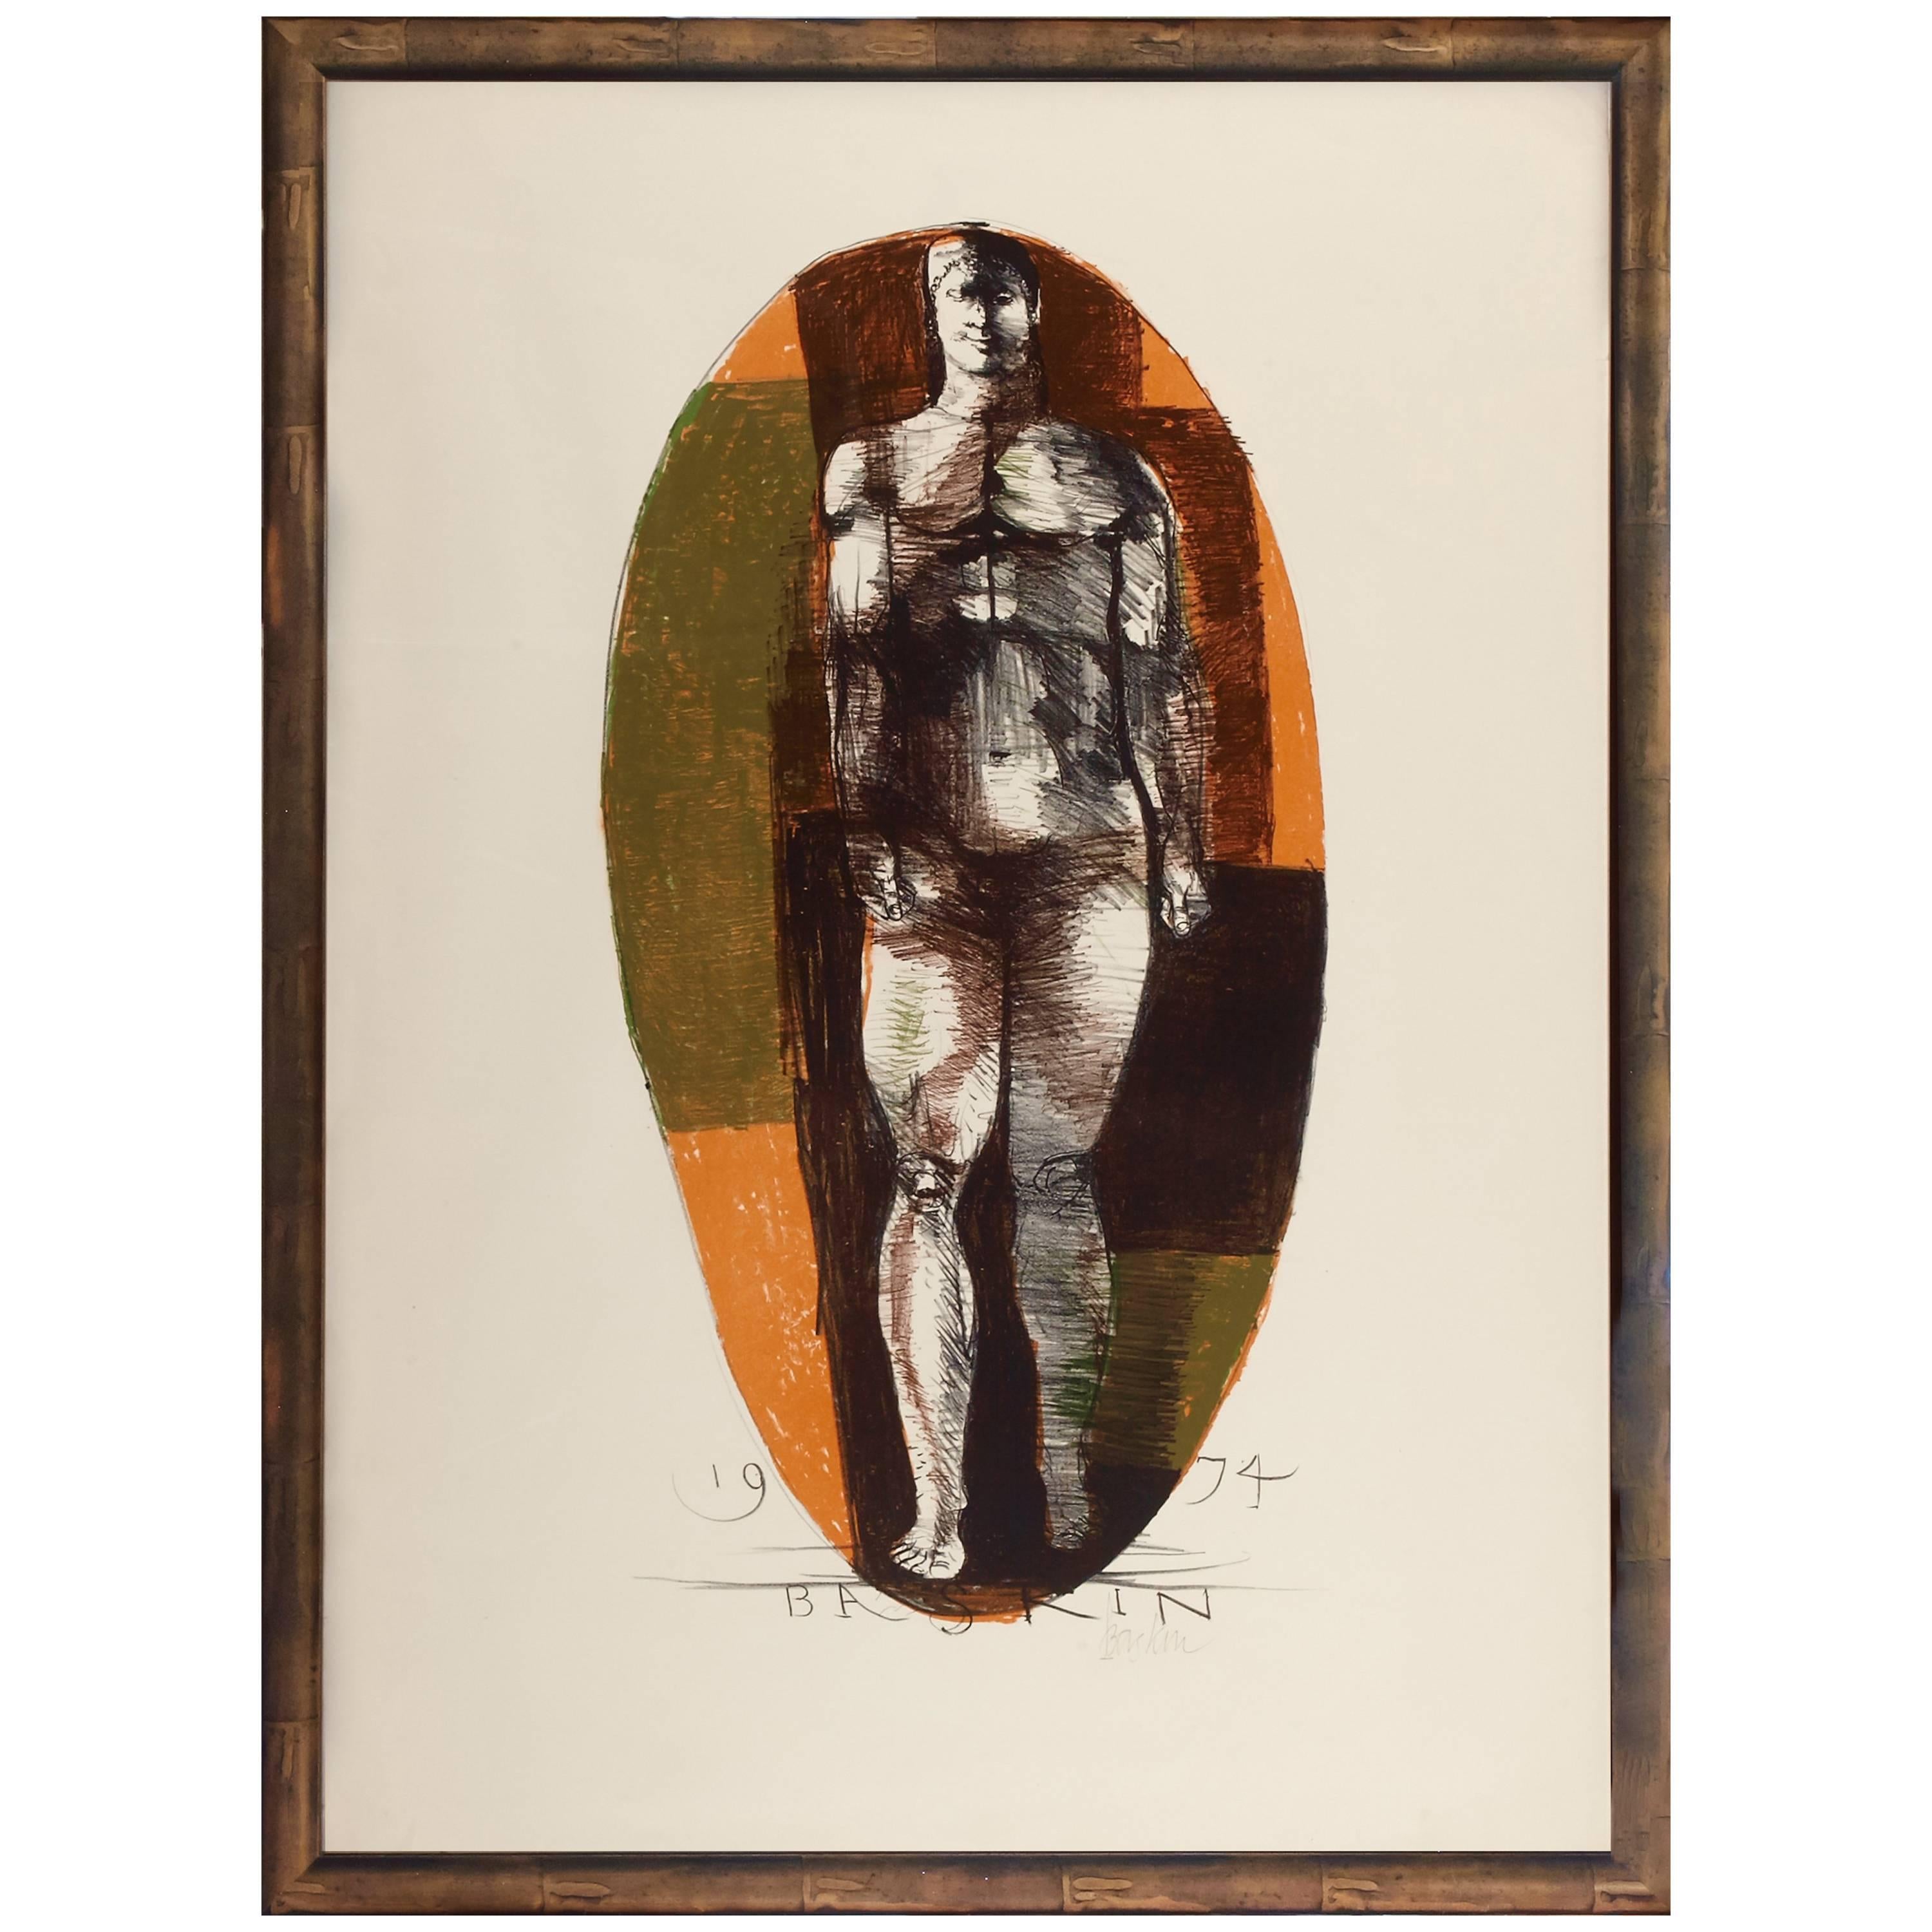 Leonard Baskin, "Universal Man" Four Color Lithograph For Sale